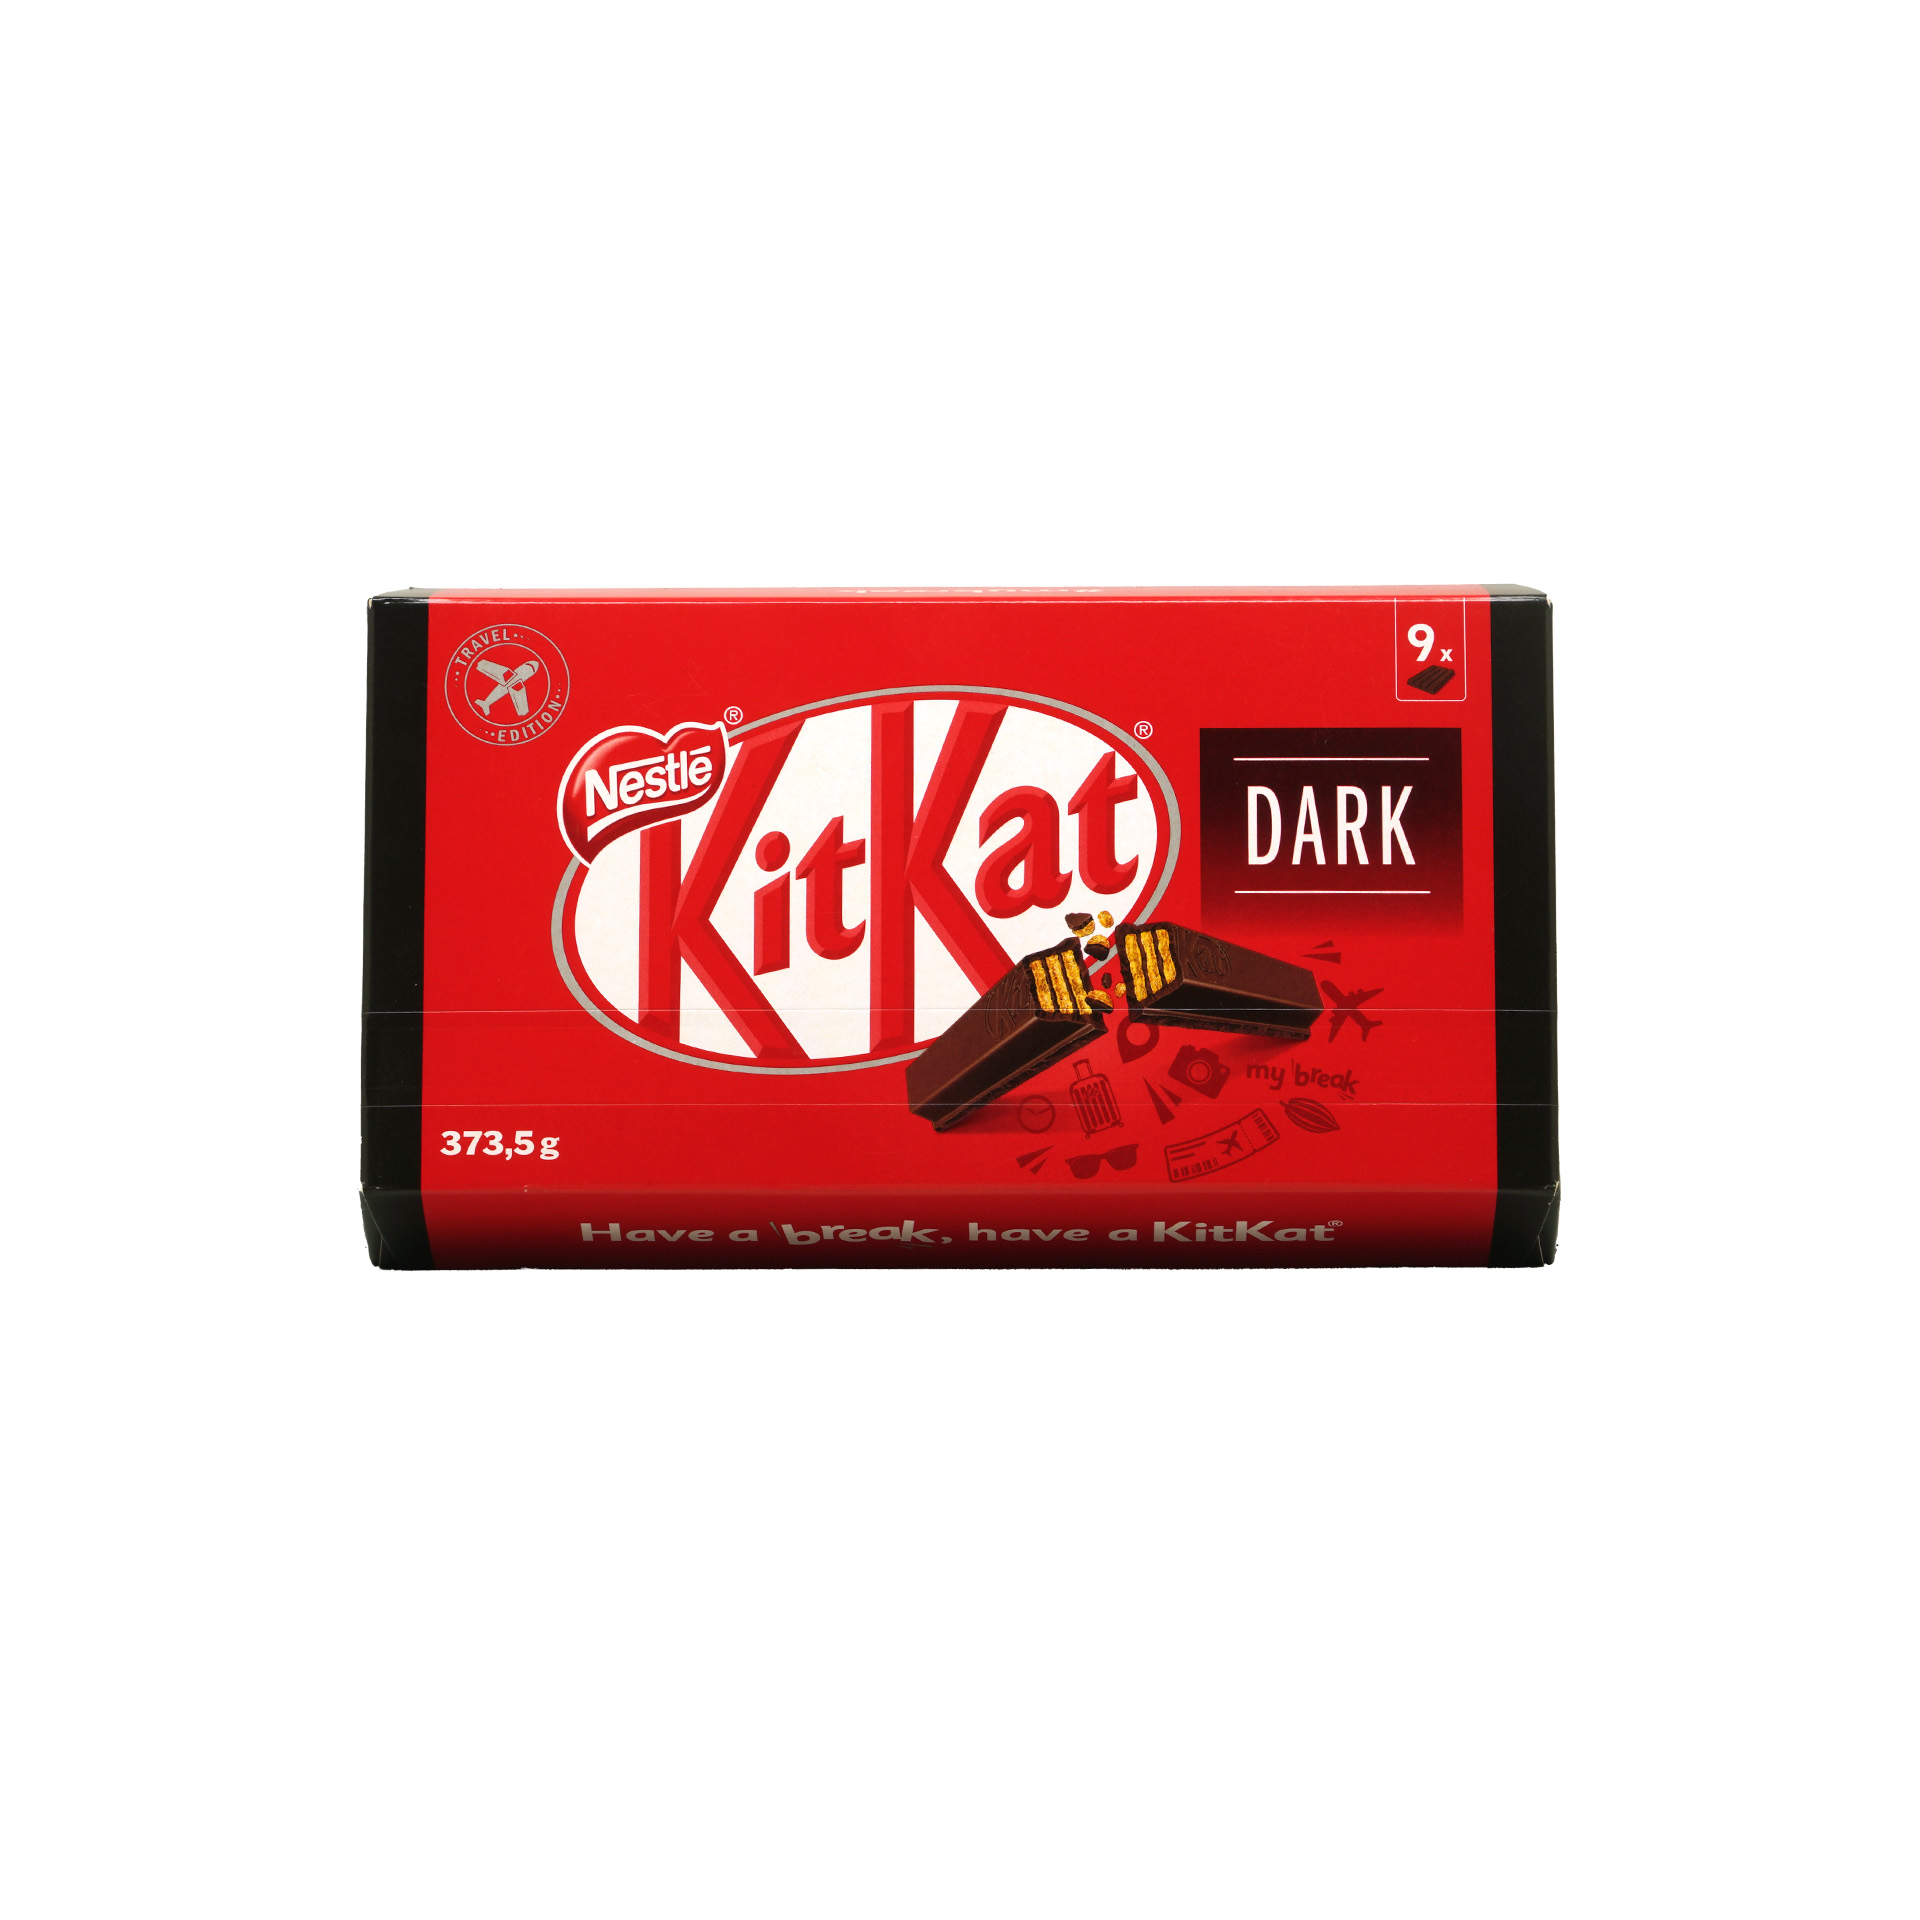 Nestle KitKat 4F Iconic Dark (9pcs, 41.5g each)